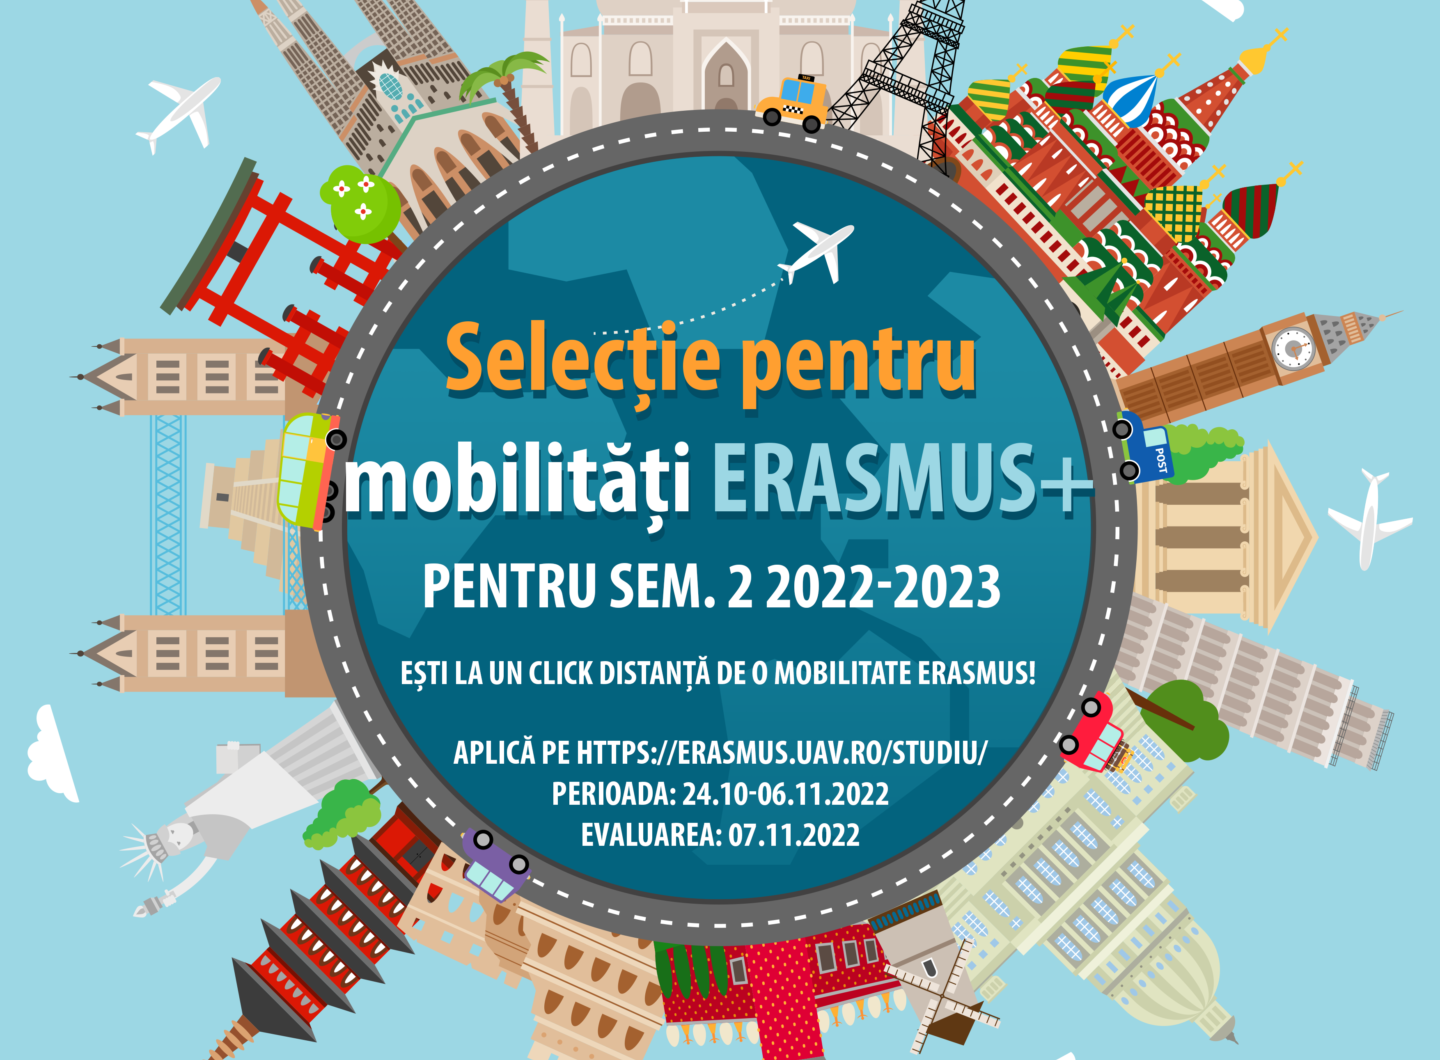 Erasmus Mobilitate sem 2